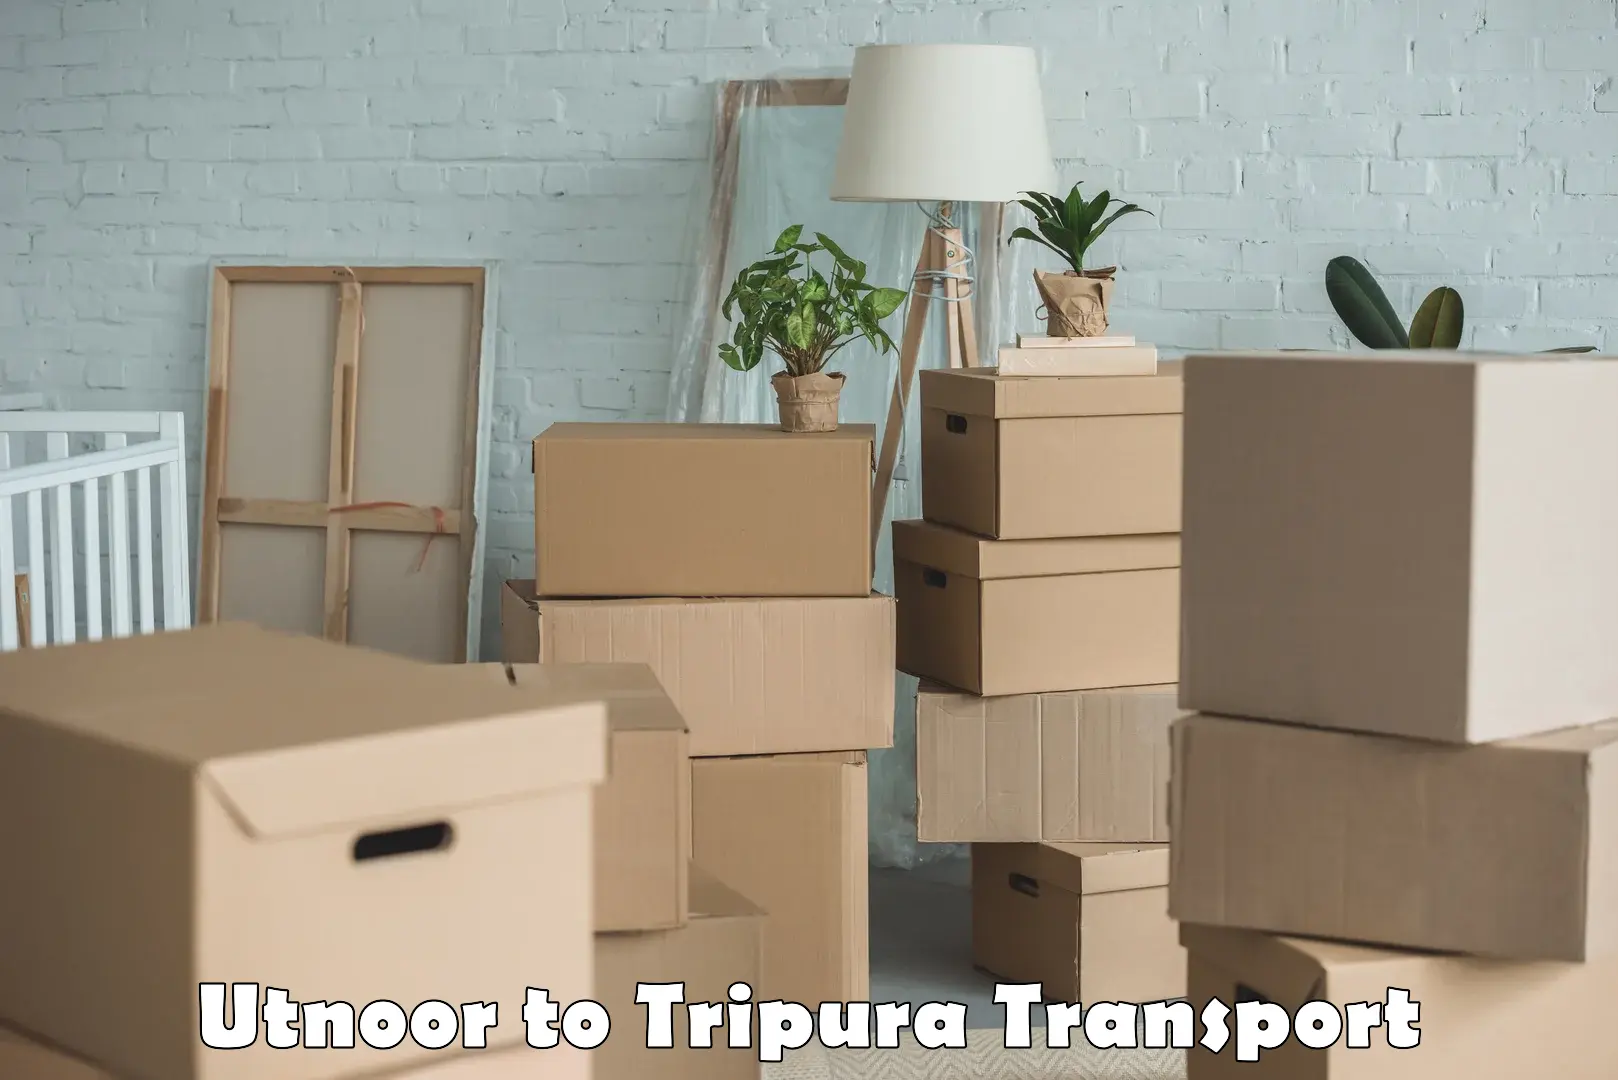 Delivery service Utnoor to Udaipur Tripura